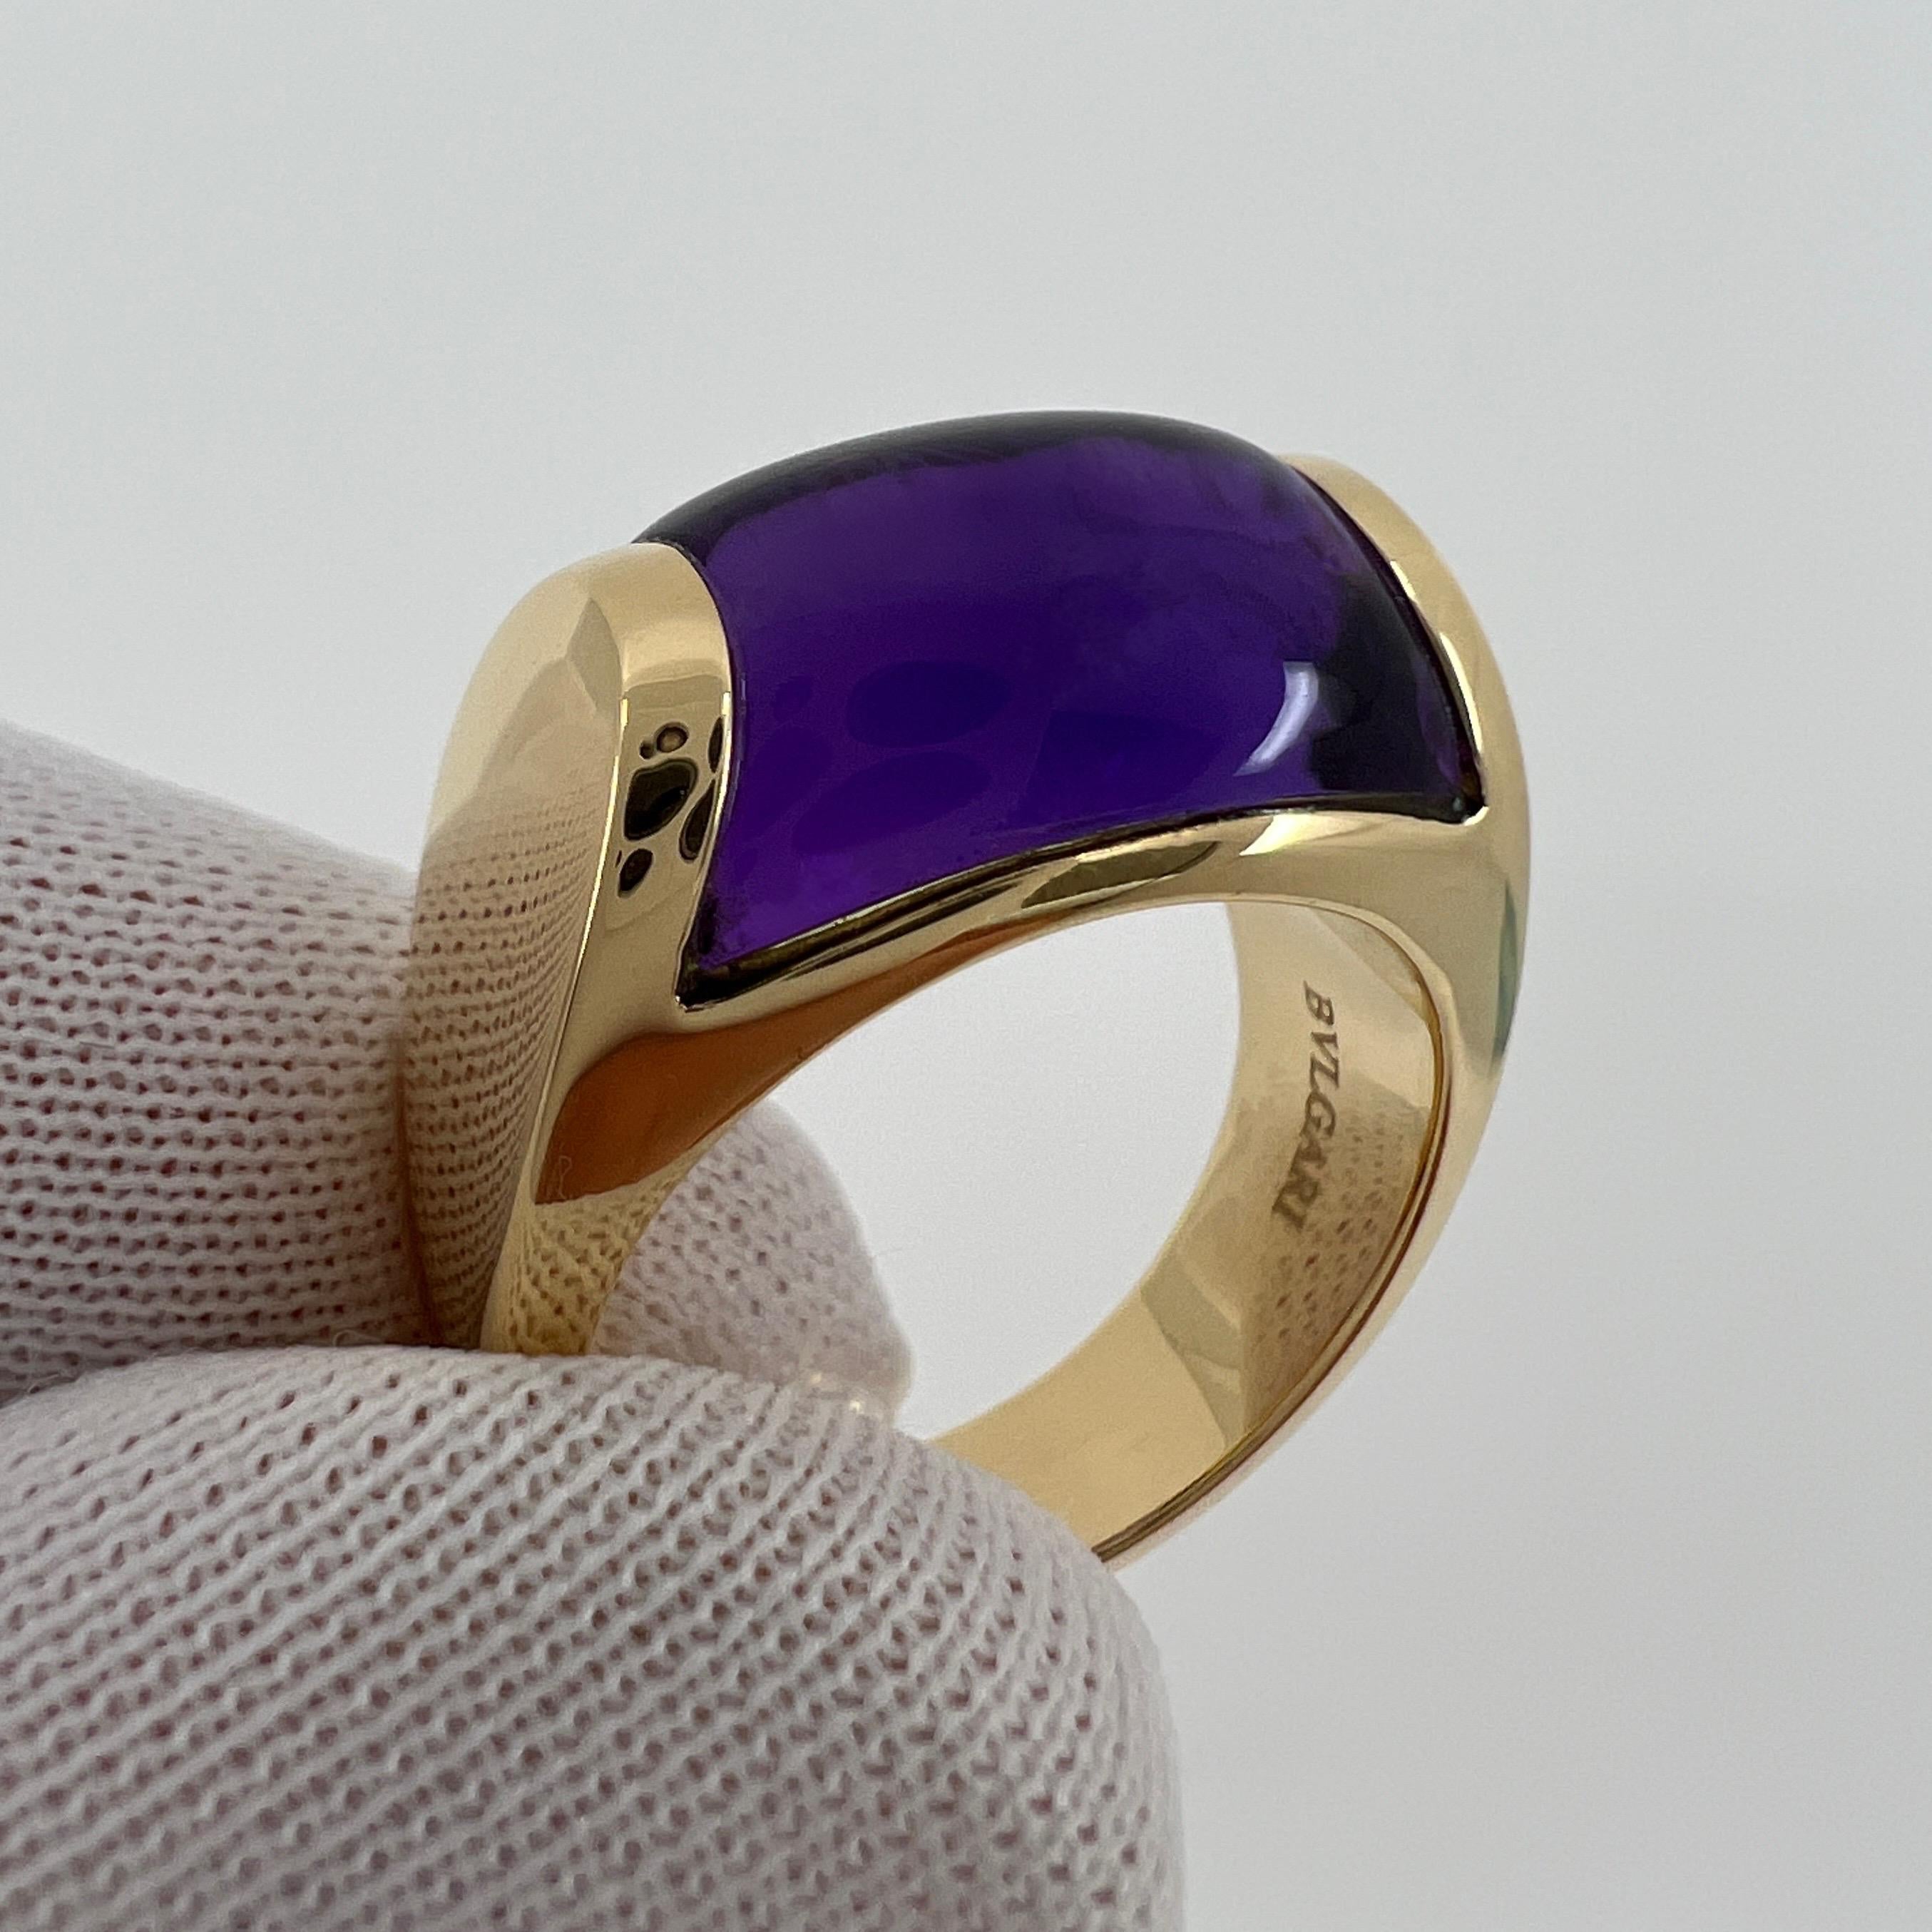 Cabochon Rare Bvlgari Bulgari Tronchetto 18k Yellow Gold Purple Amethyst Ring with Box